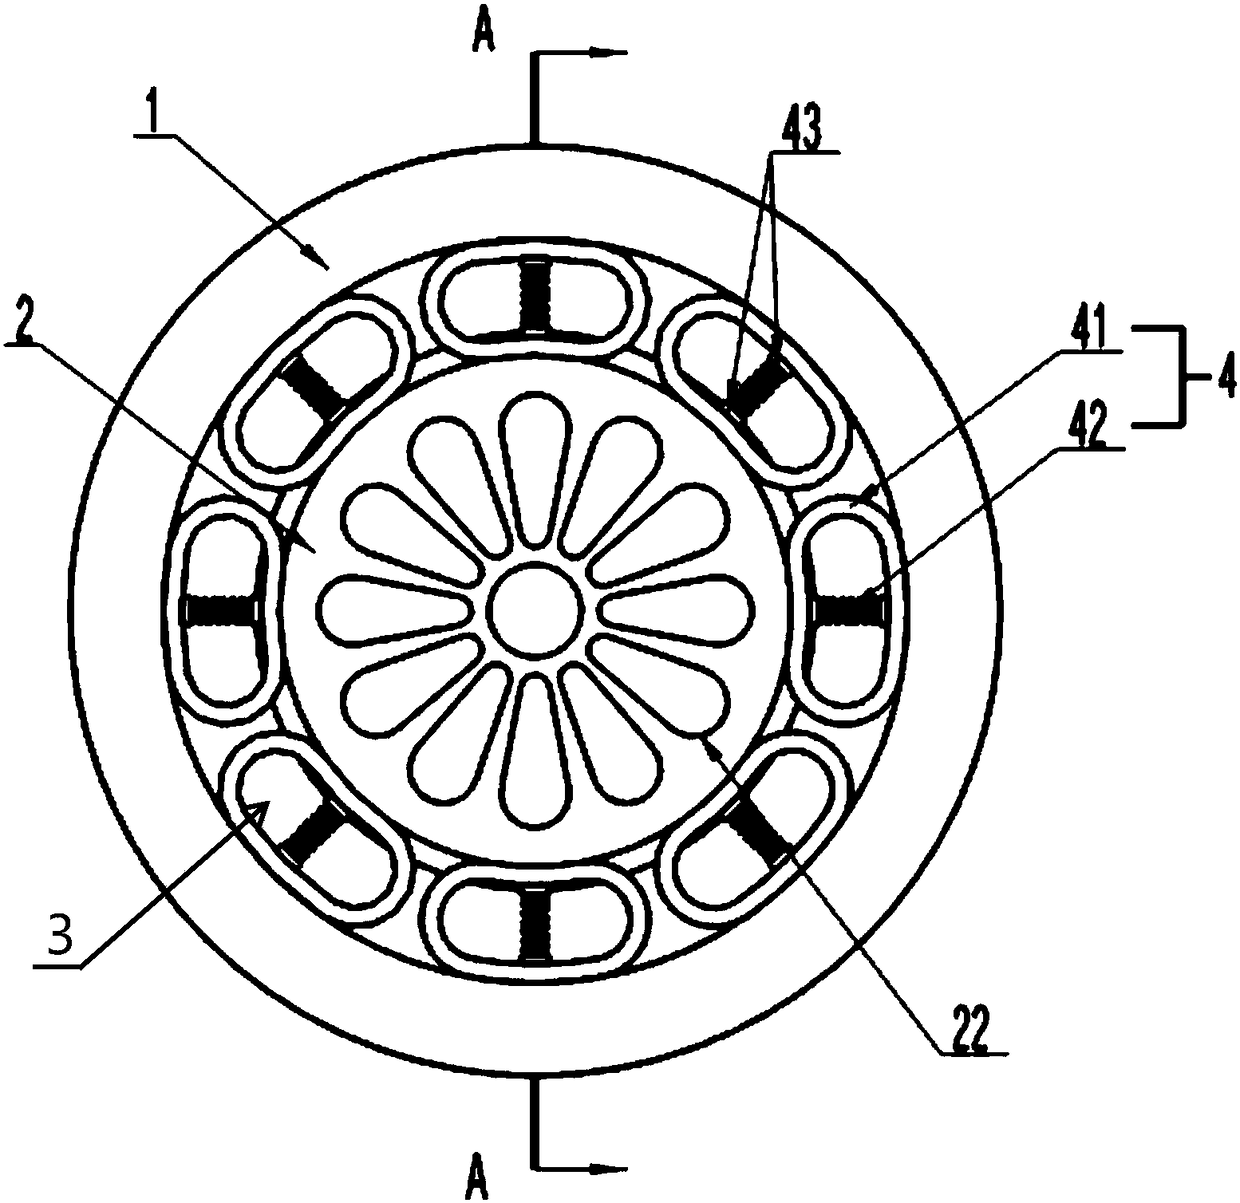 A shock-absorbing wheel hub for an air-free tire